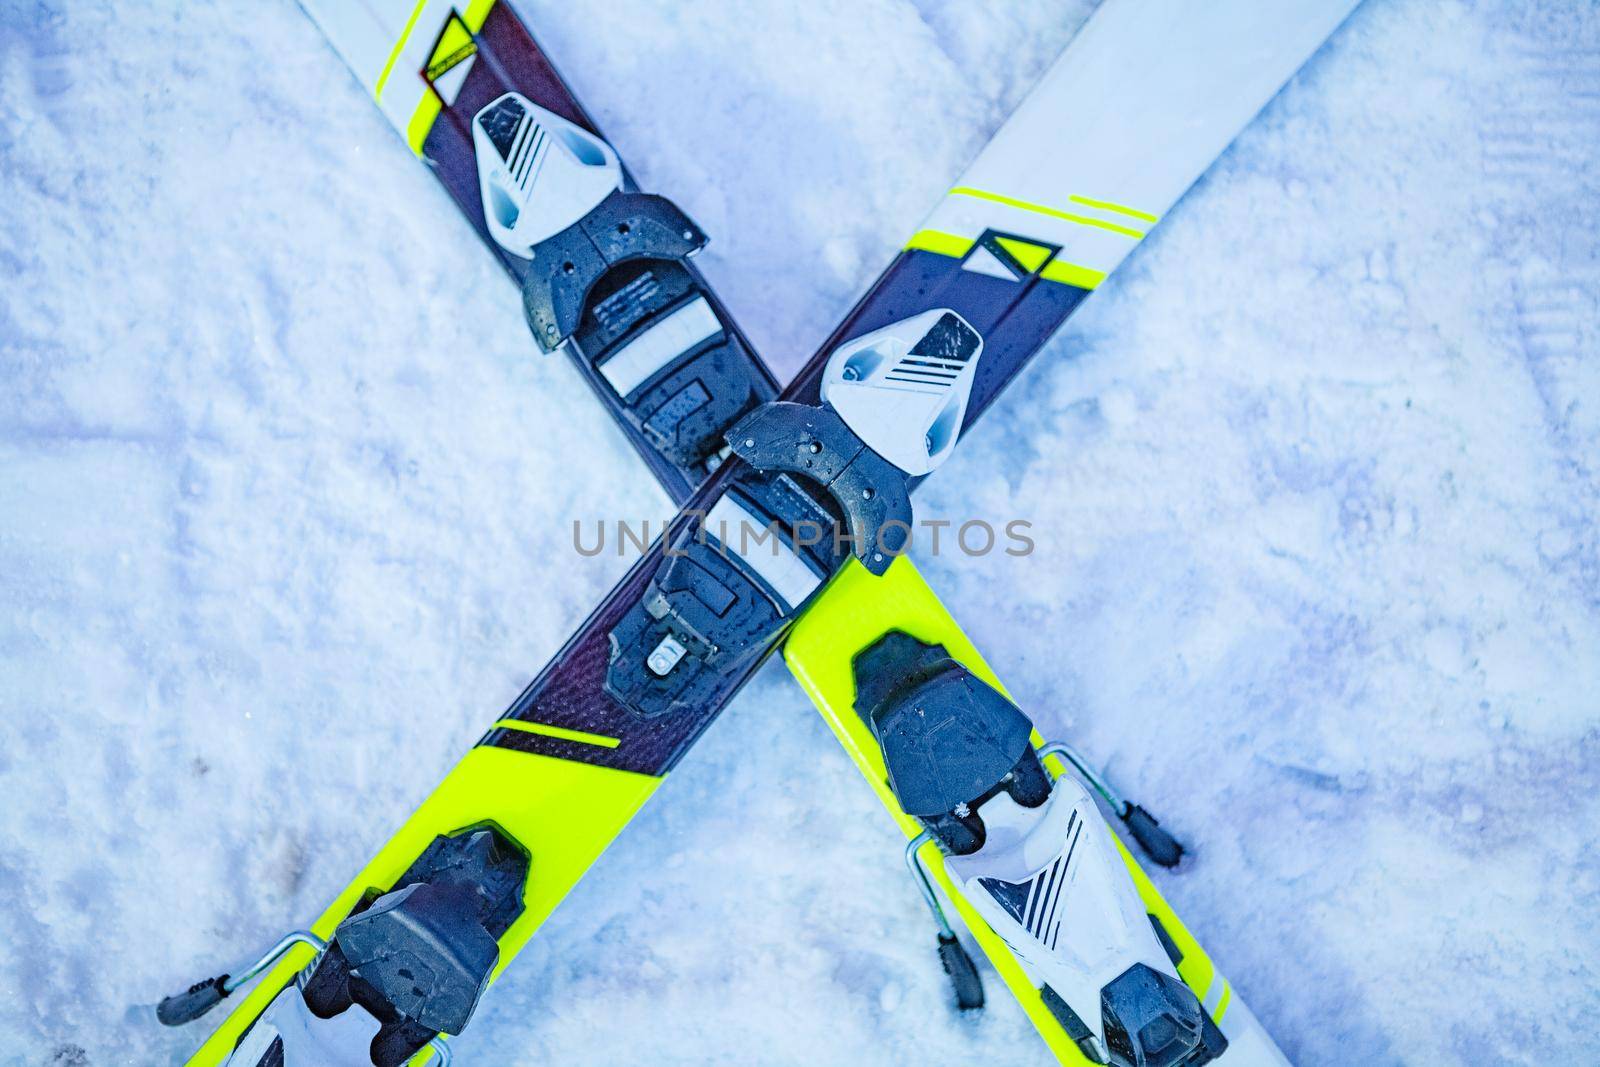 Skis on snow in the form of cross by dmitrysosenushkin